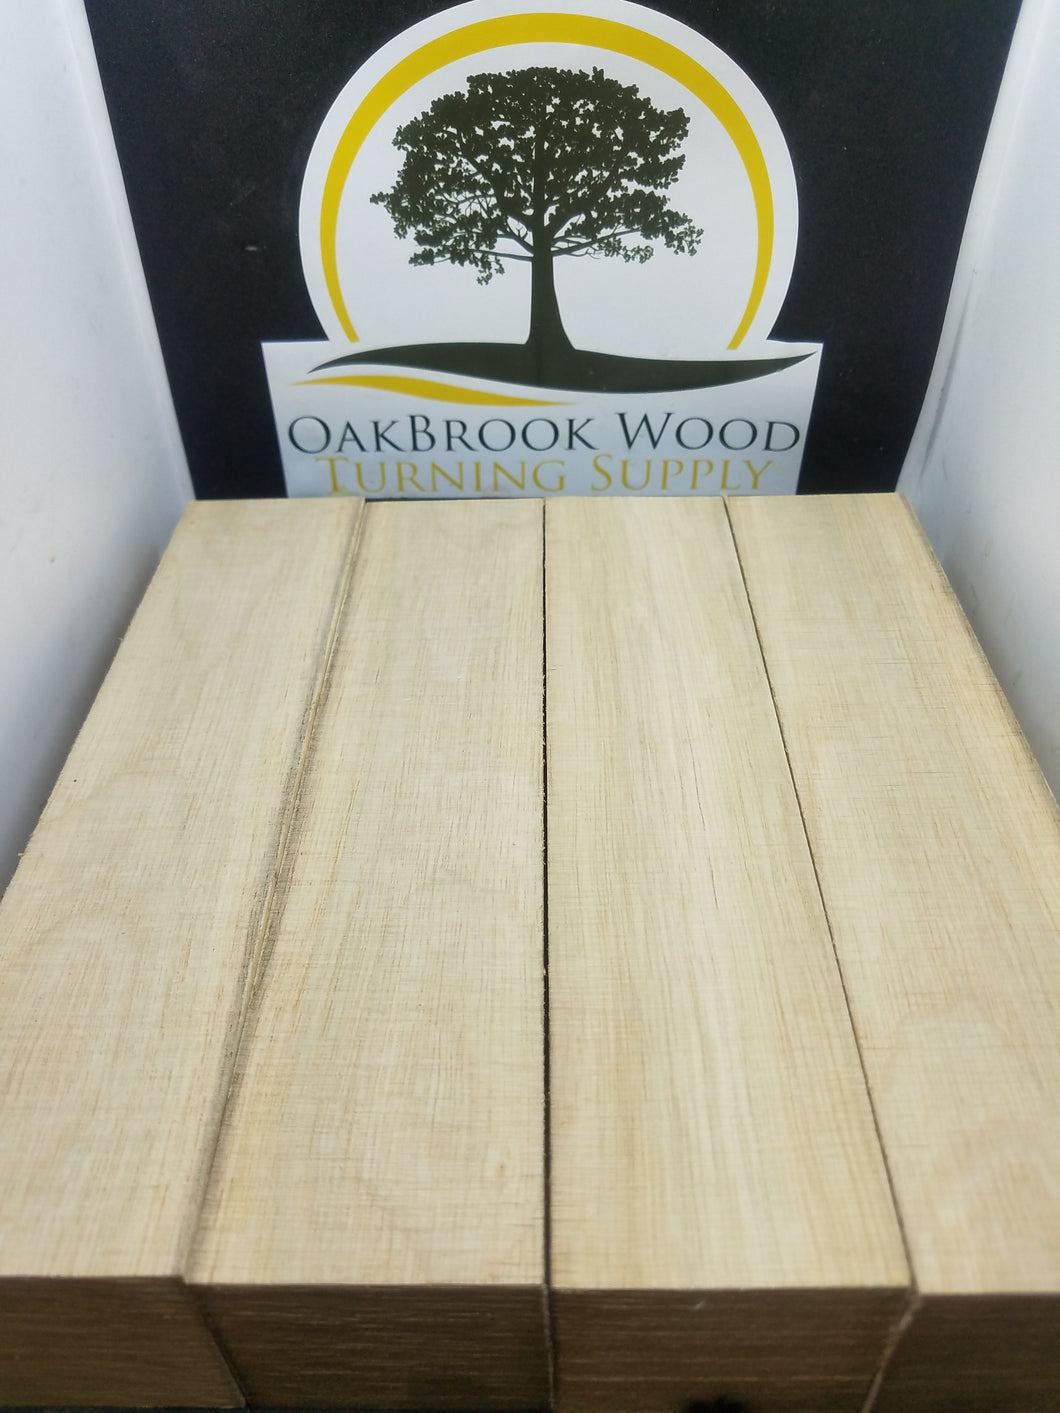 Persimmon - Oakbrook Wood Turning Supply